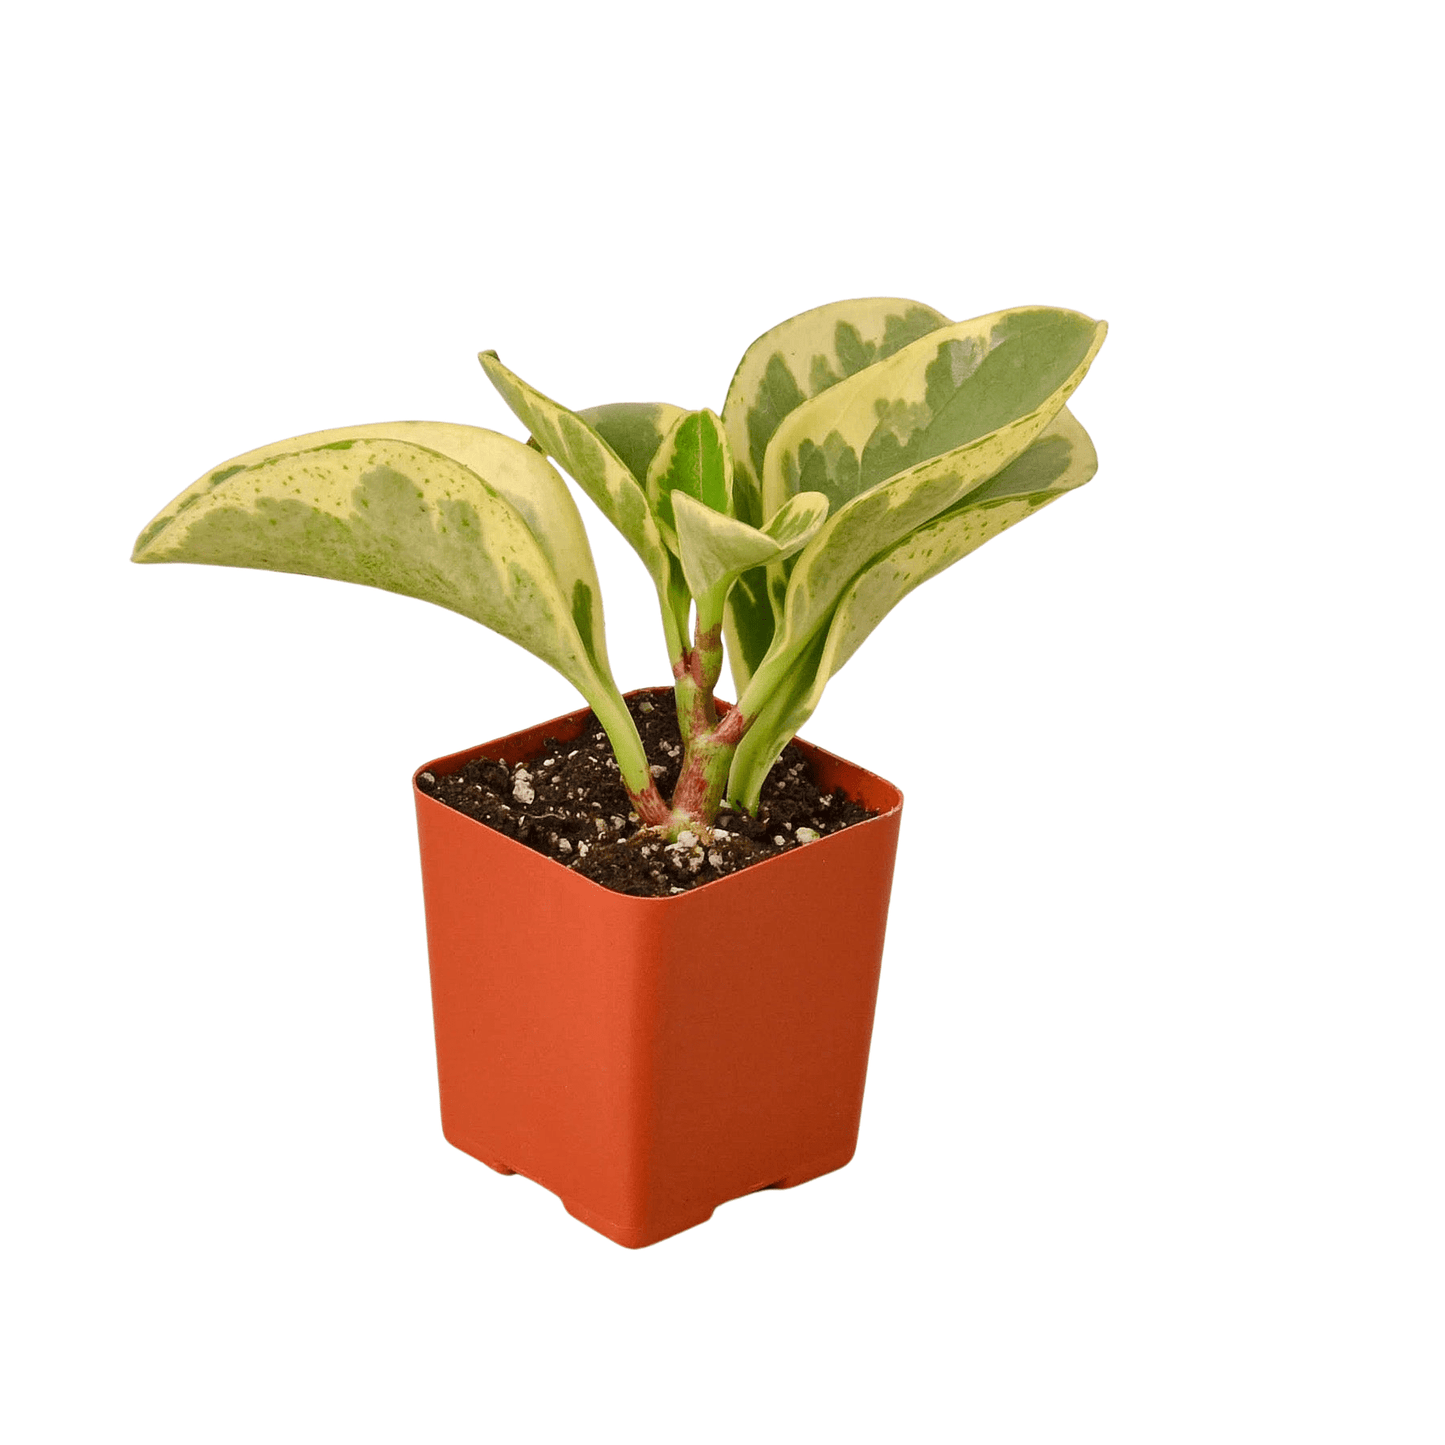 3" Tropical Plant Variety Bundle - Plantonio